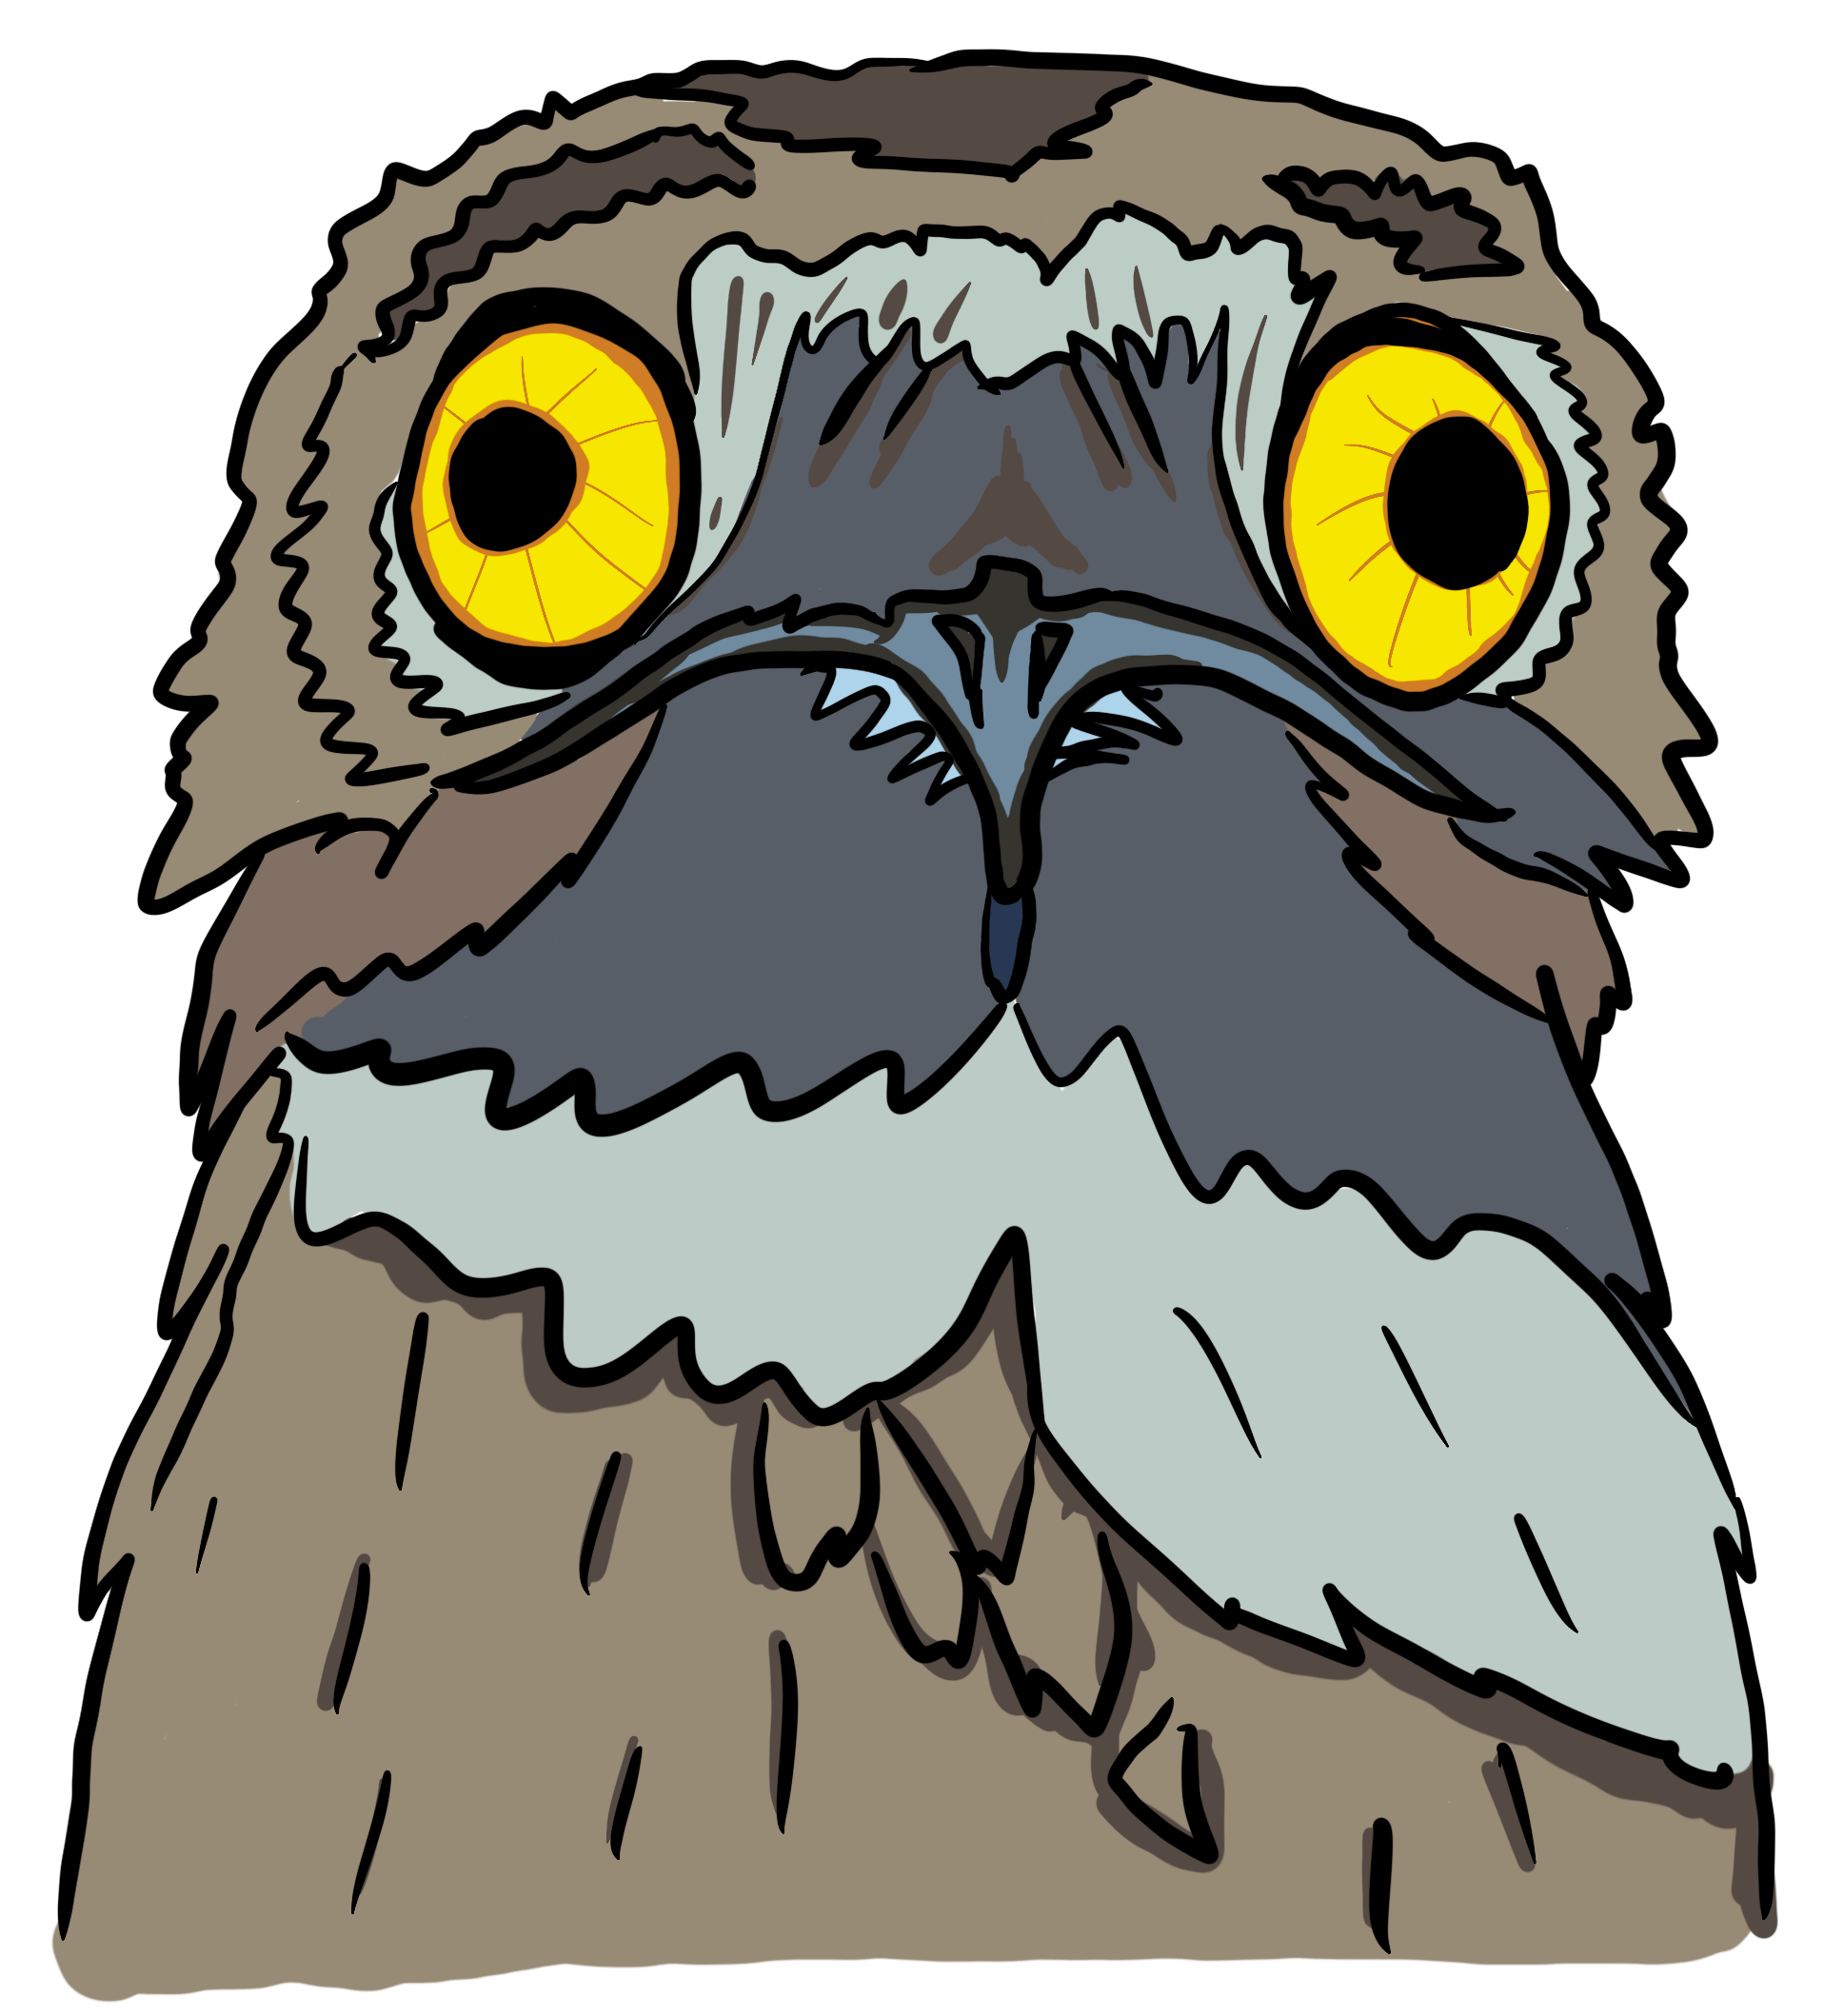 Super creepy stary owl